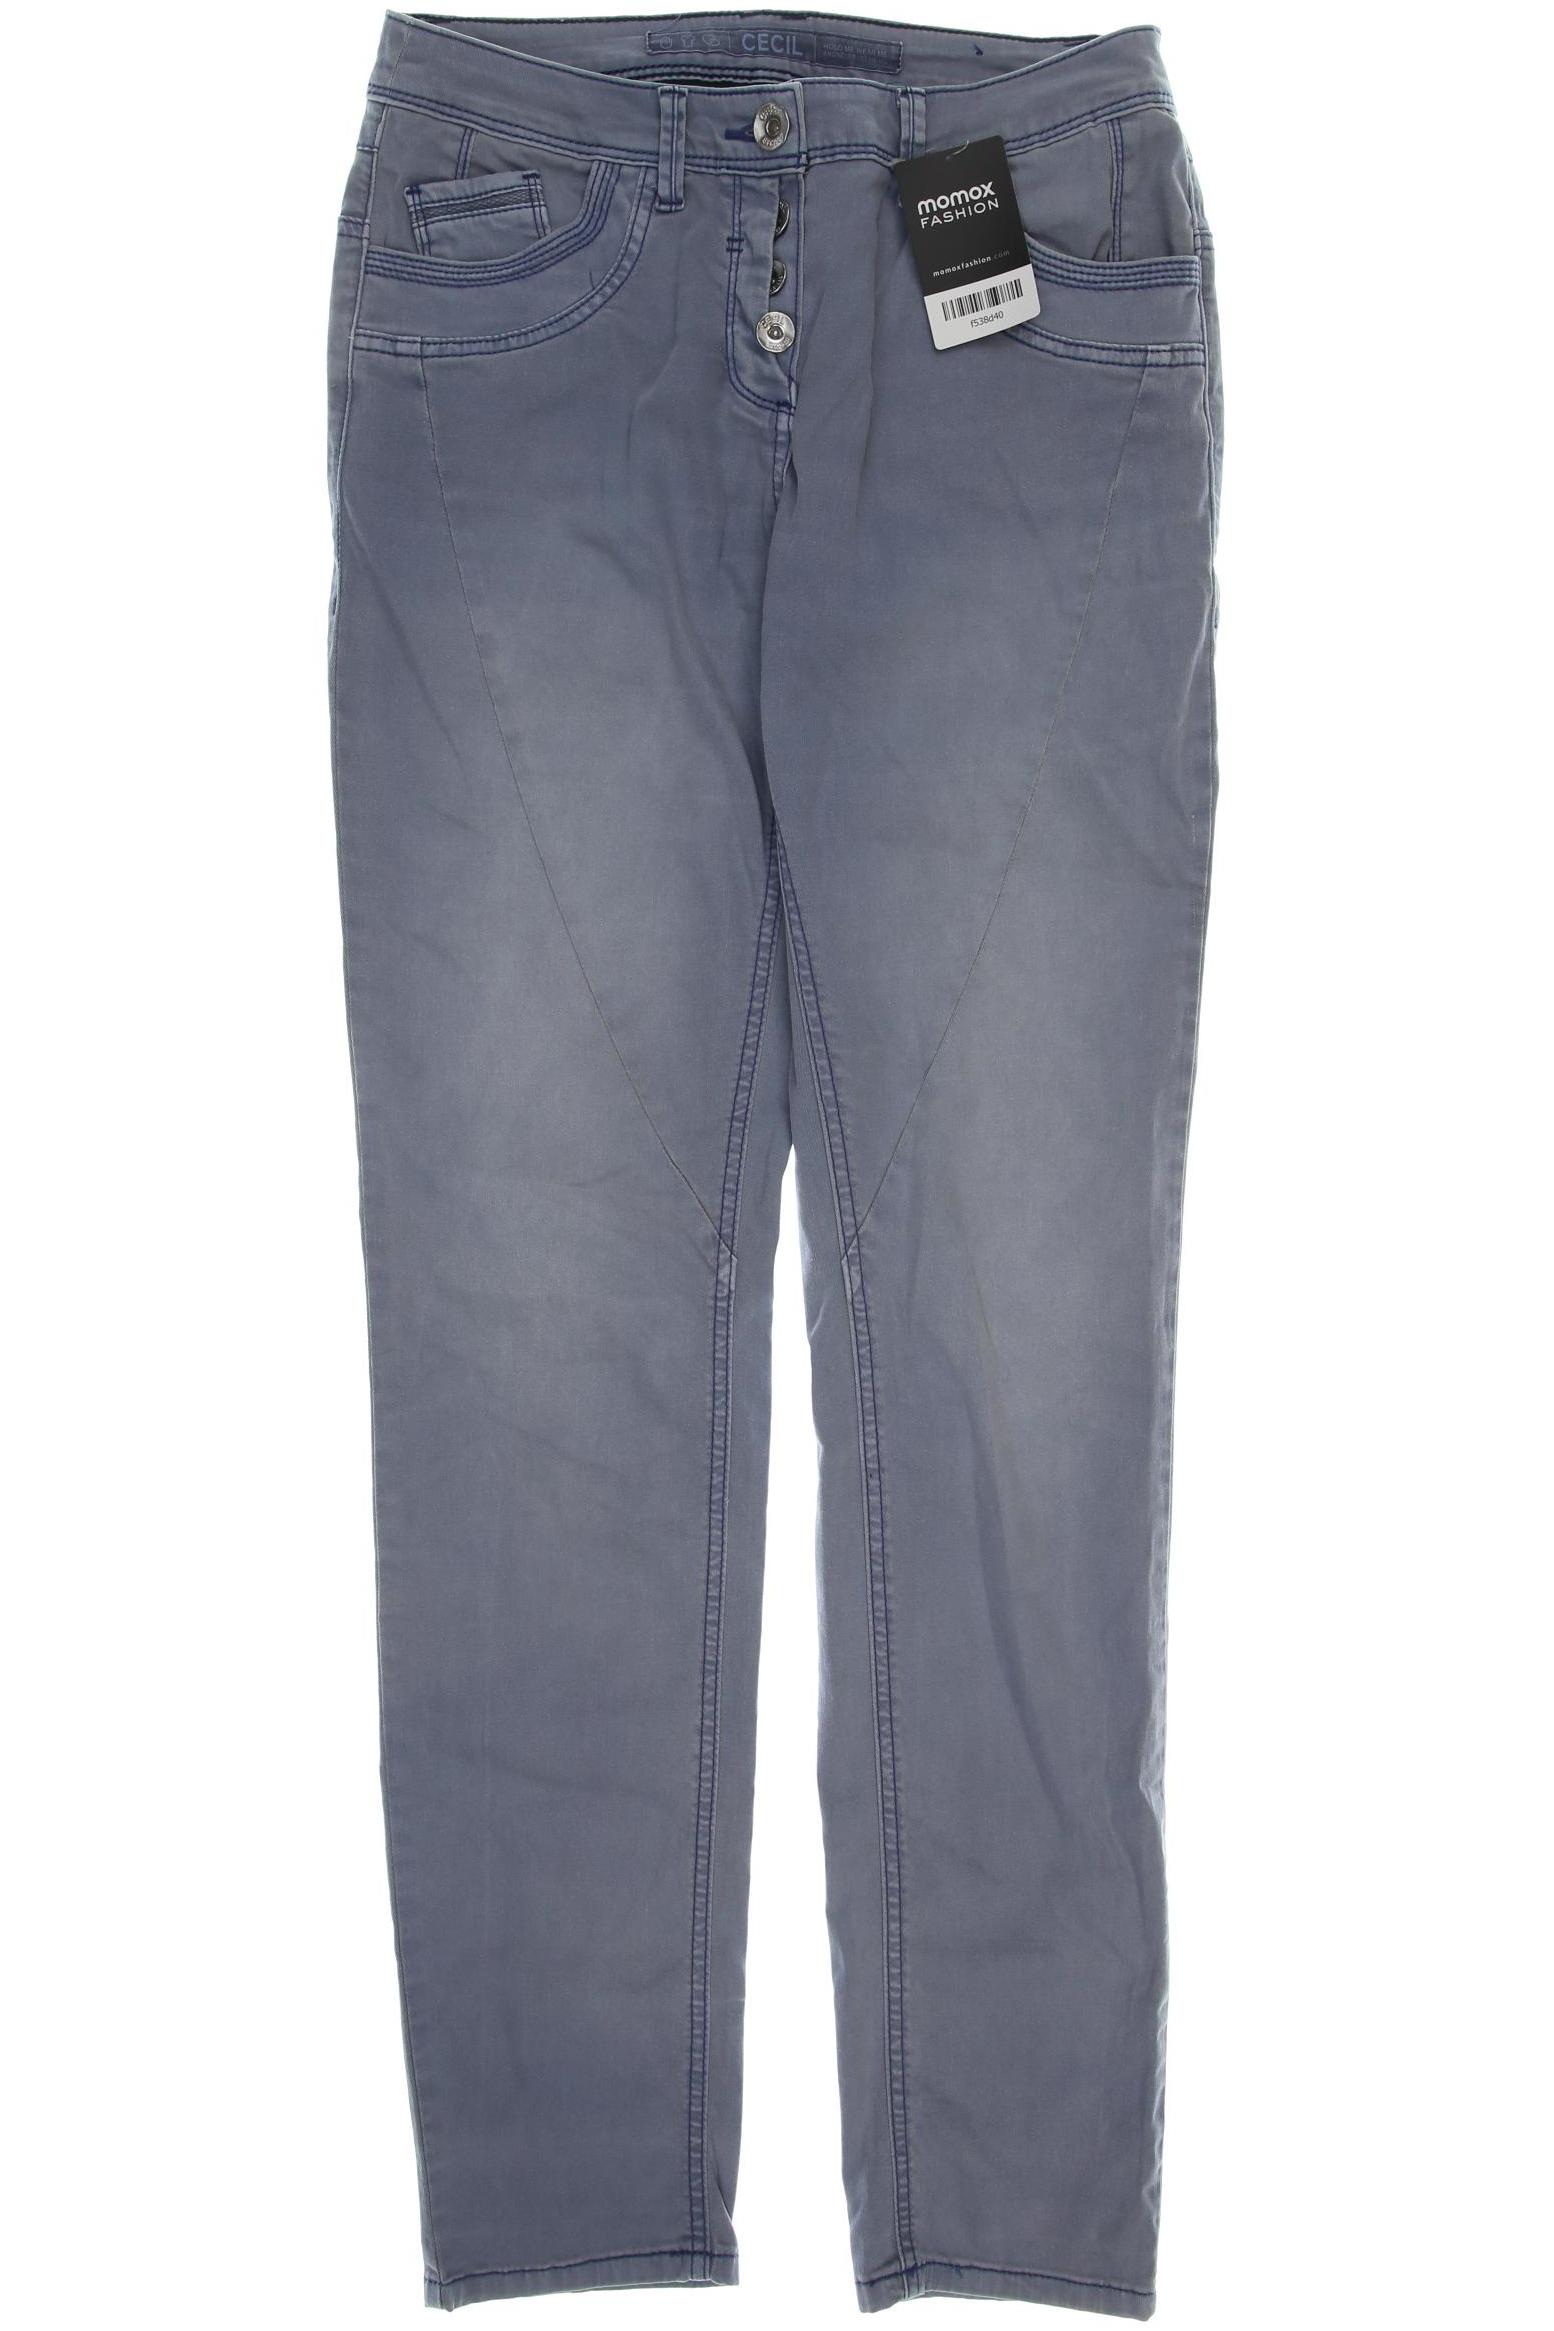 Cecil Damen Jeans, blau, Gr. 34 von cecil